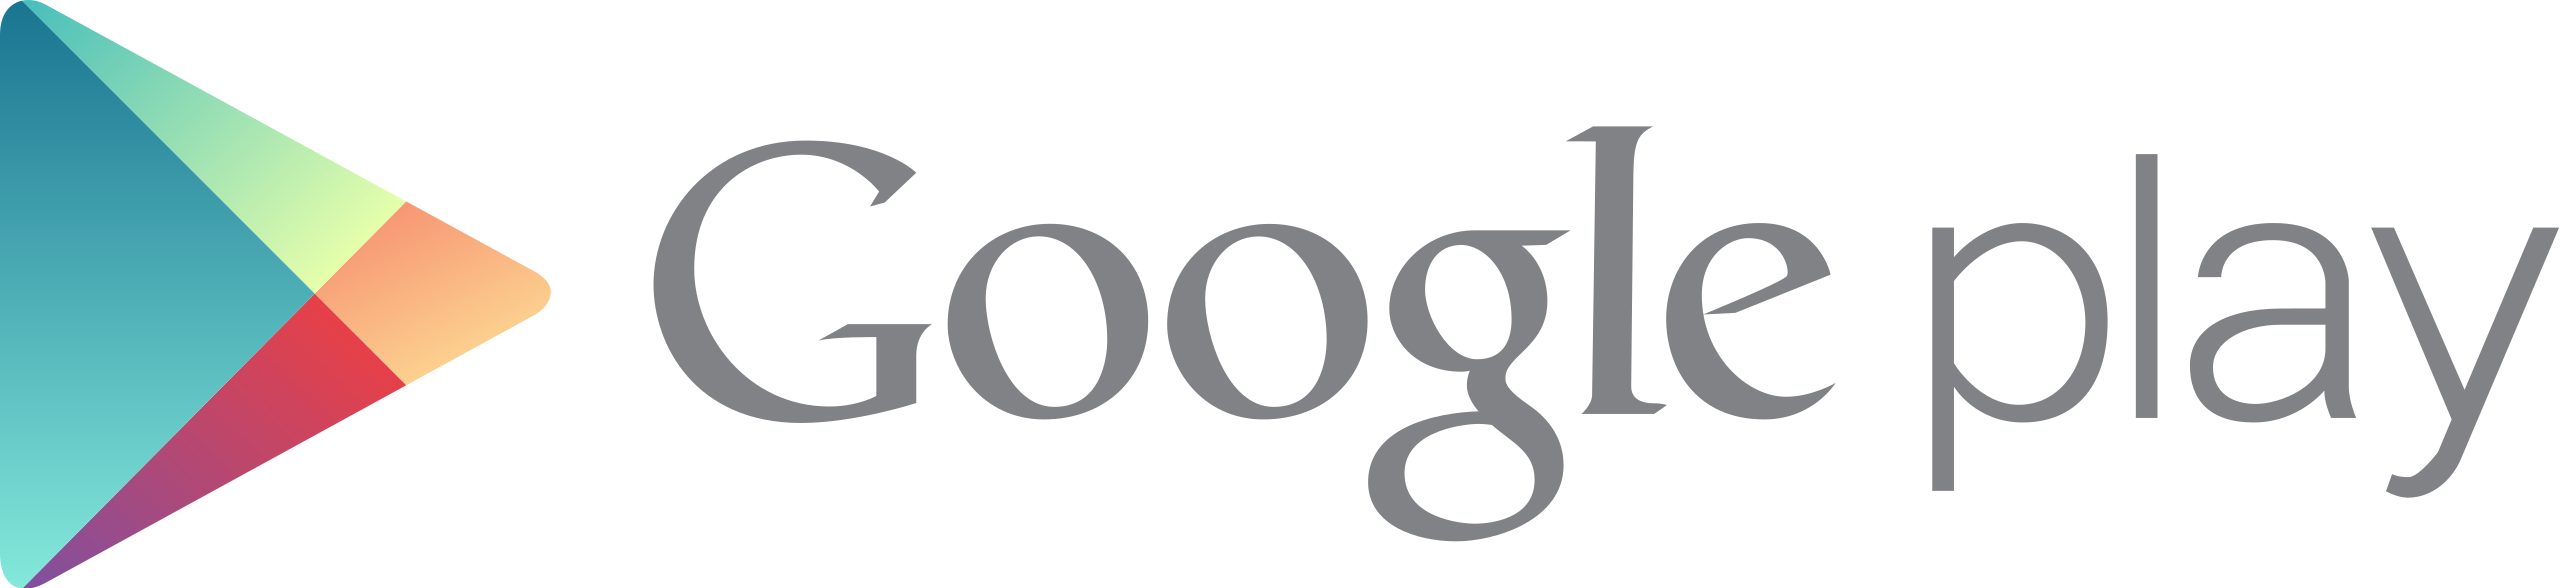 File:Google Play logo (2012-2015).svg - Wikipedia